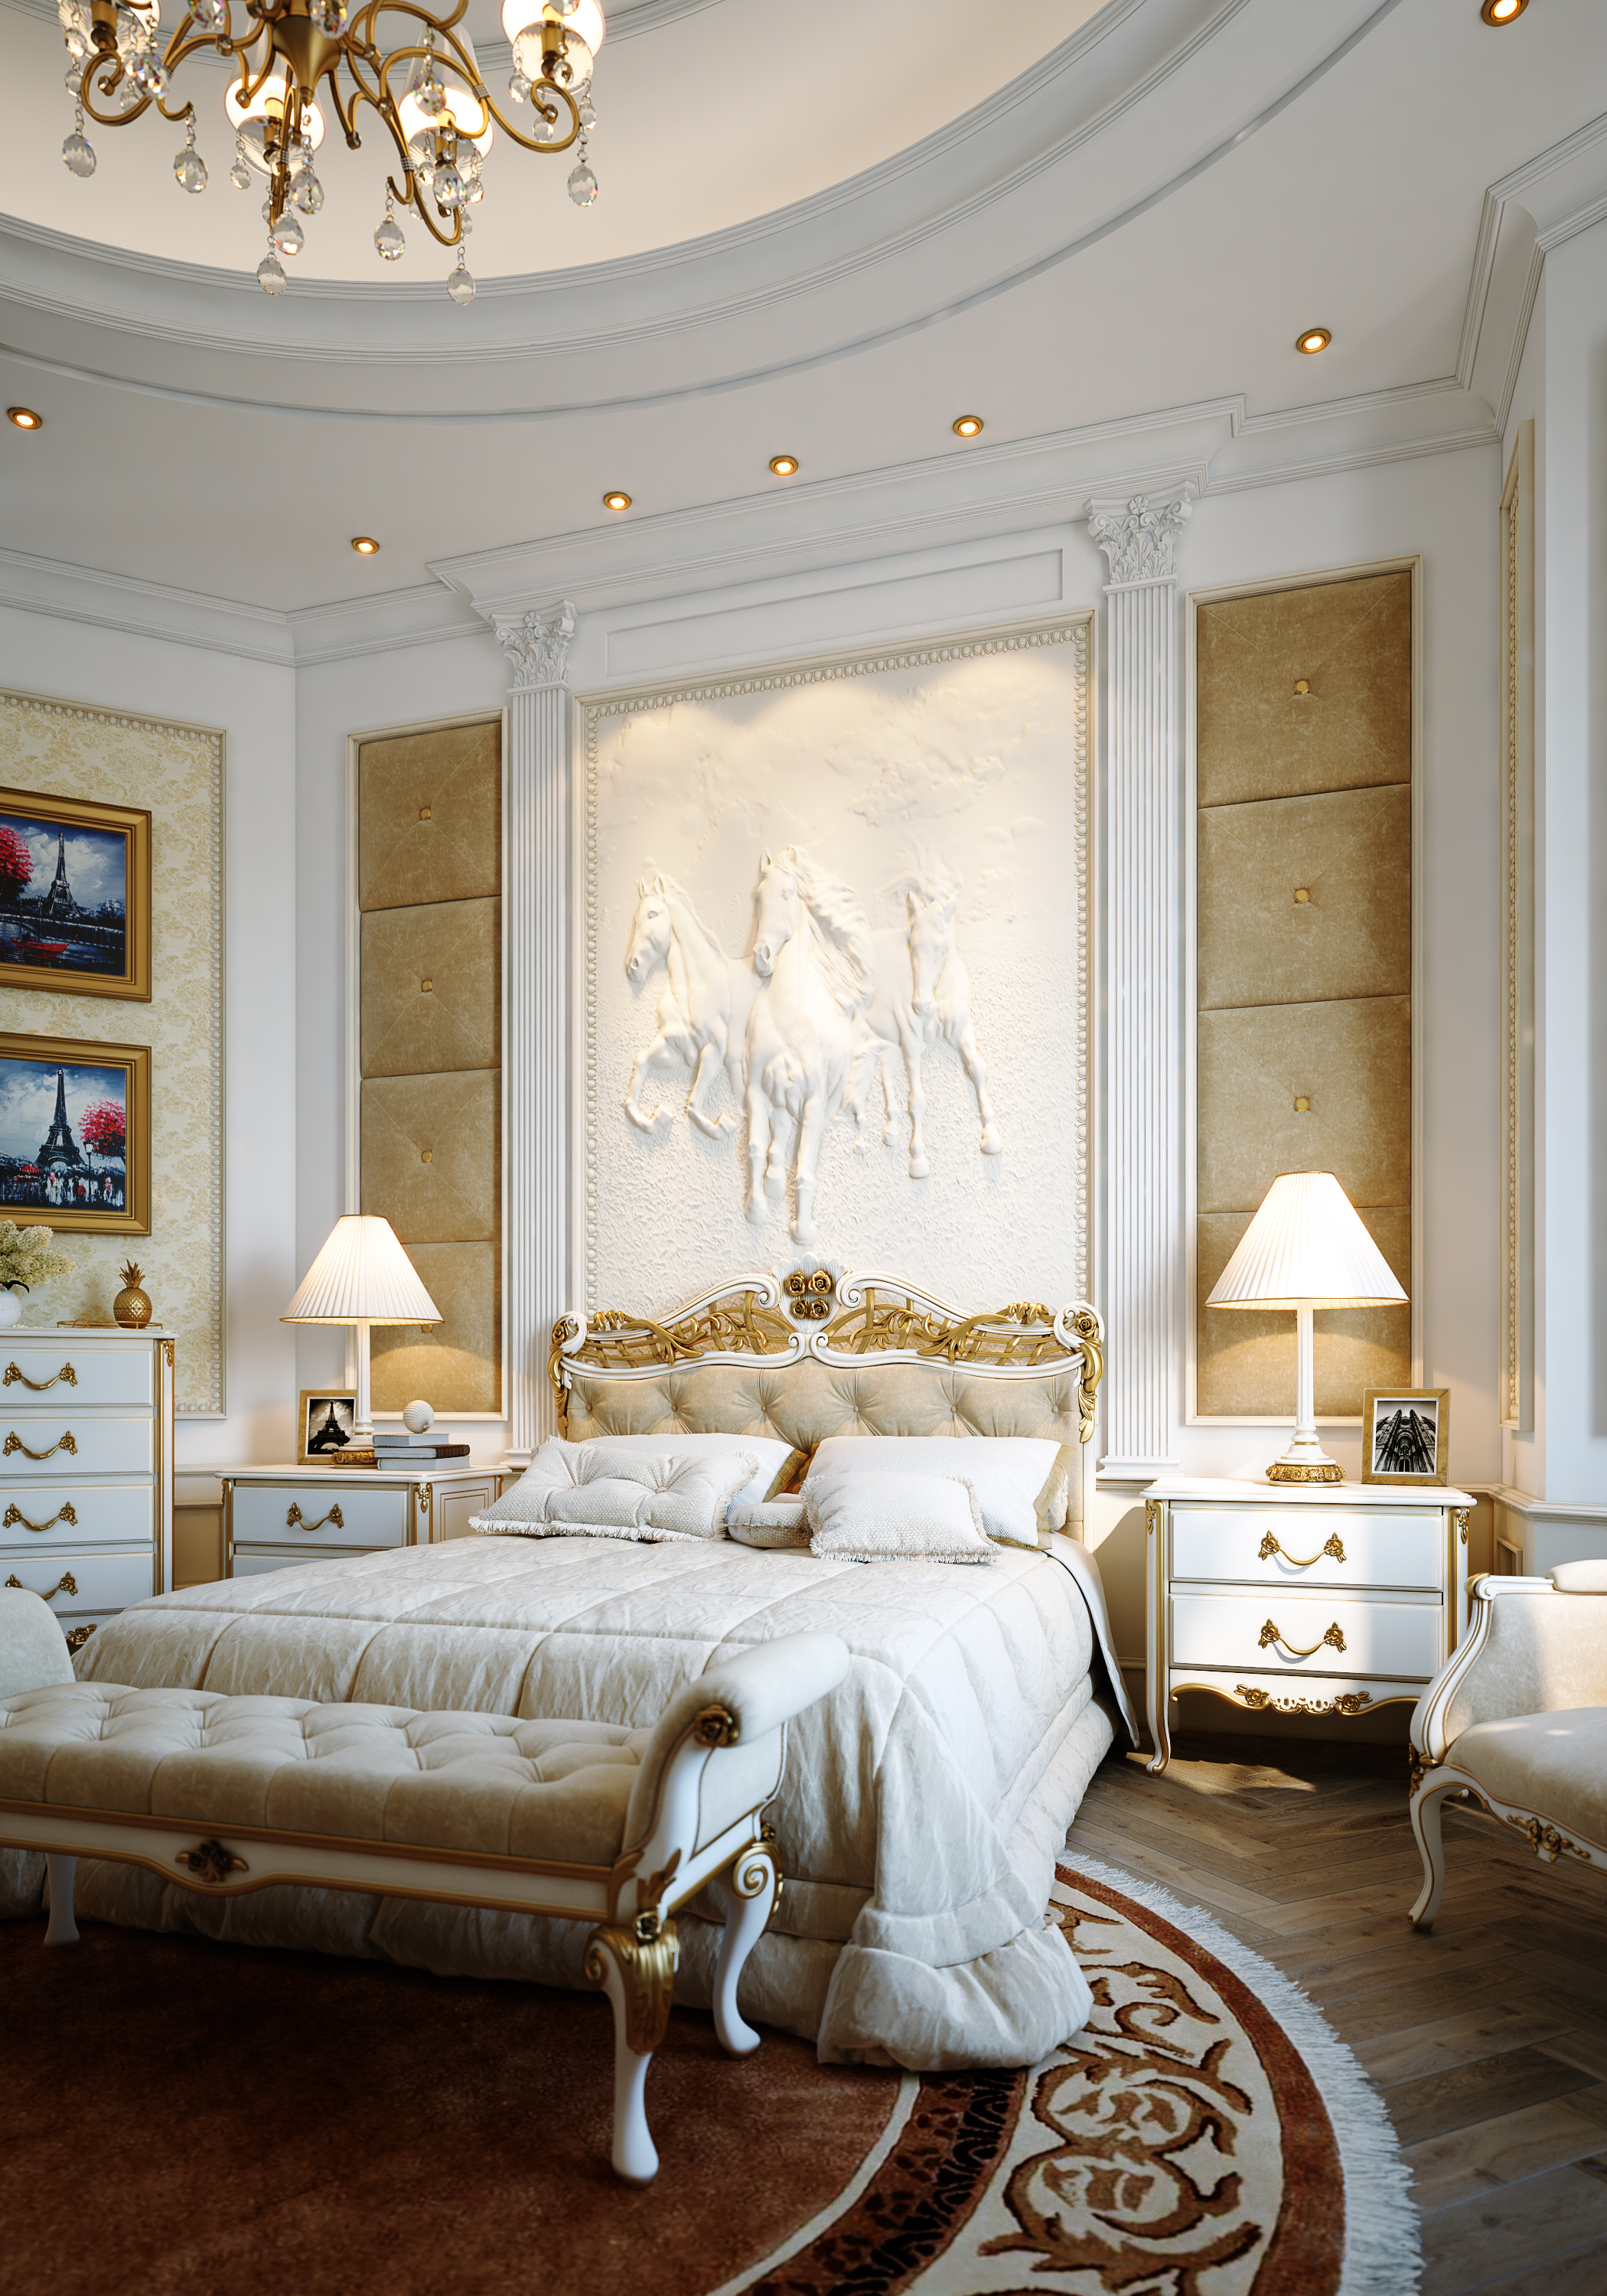 Classic Bedroom dans 3d max vray 3.0 image